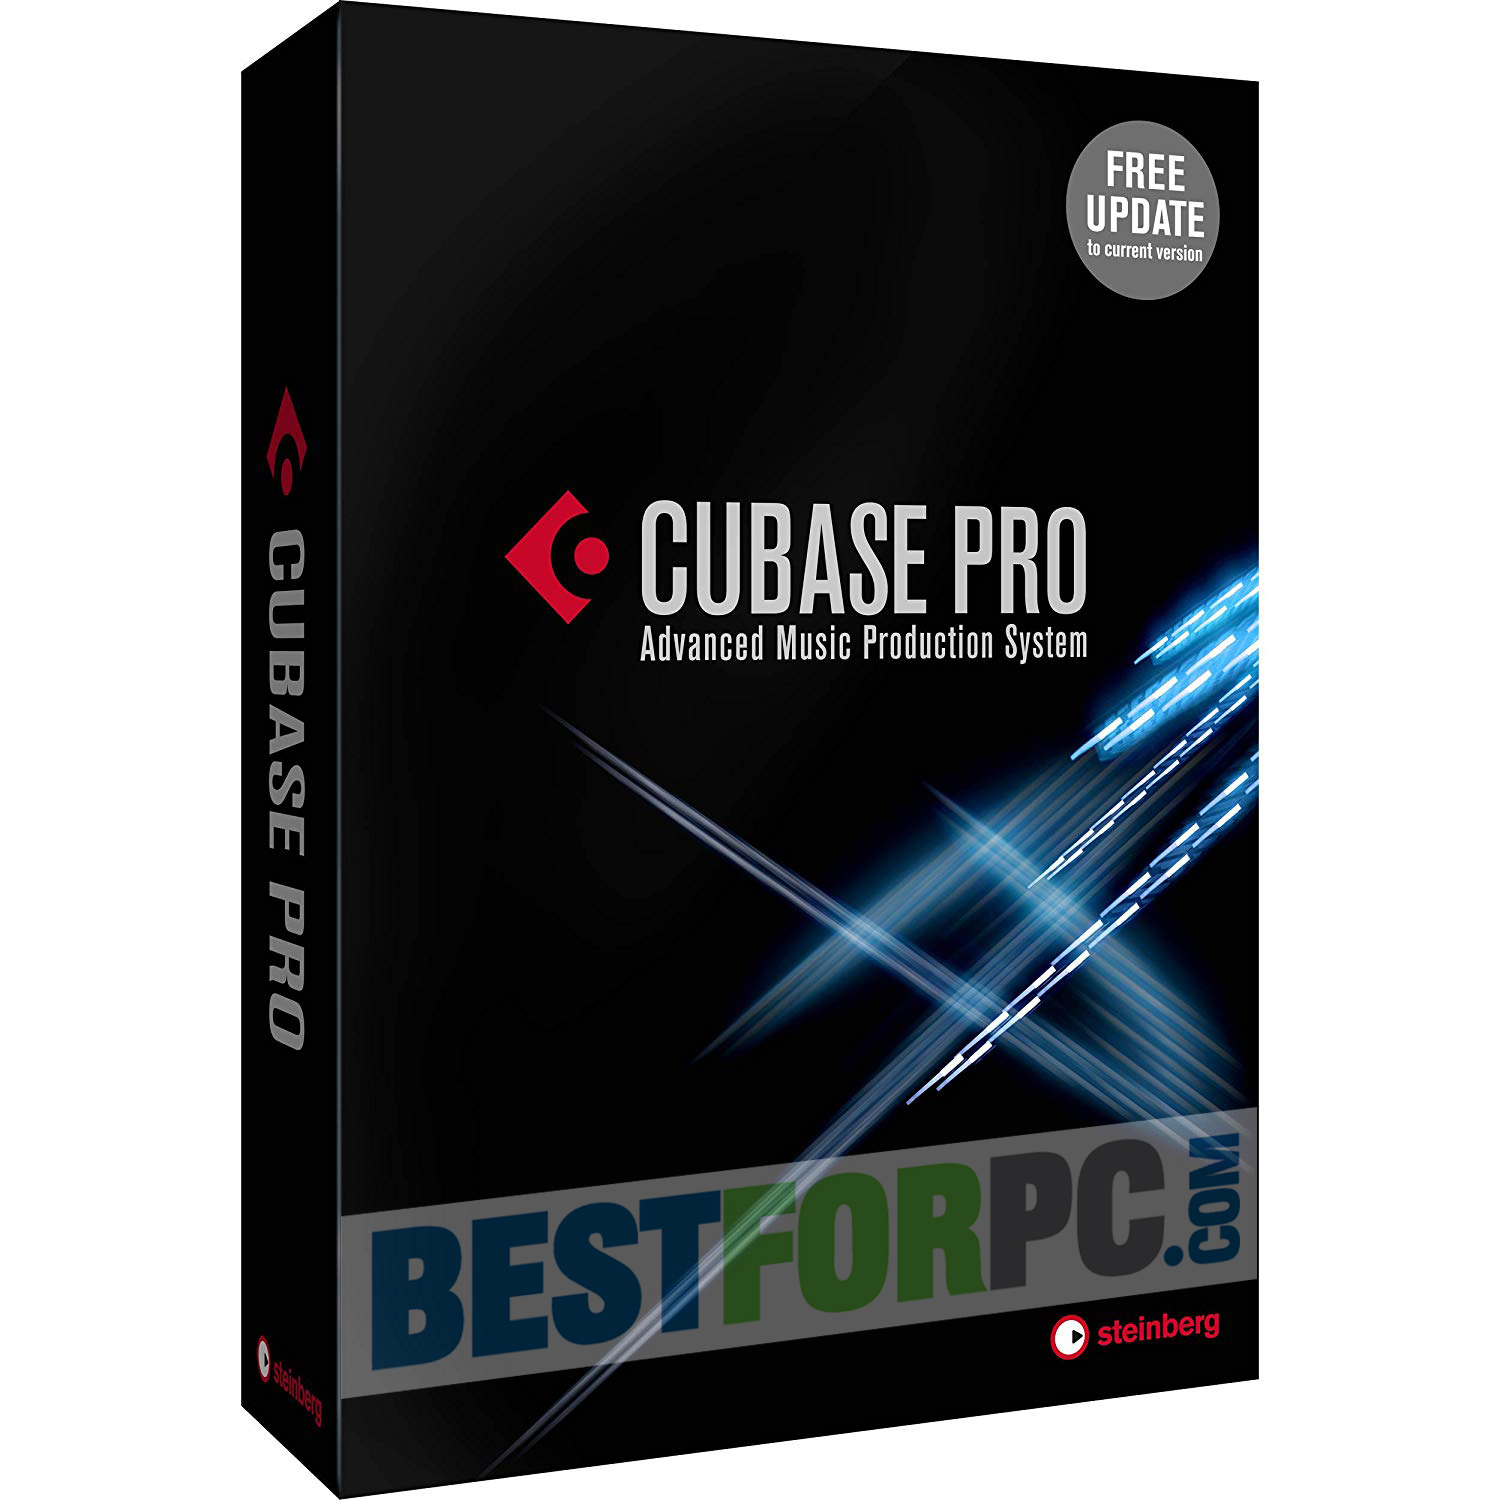 cubase pro 9.5 download free for mac